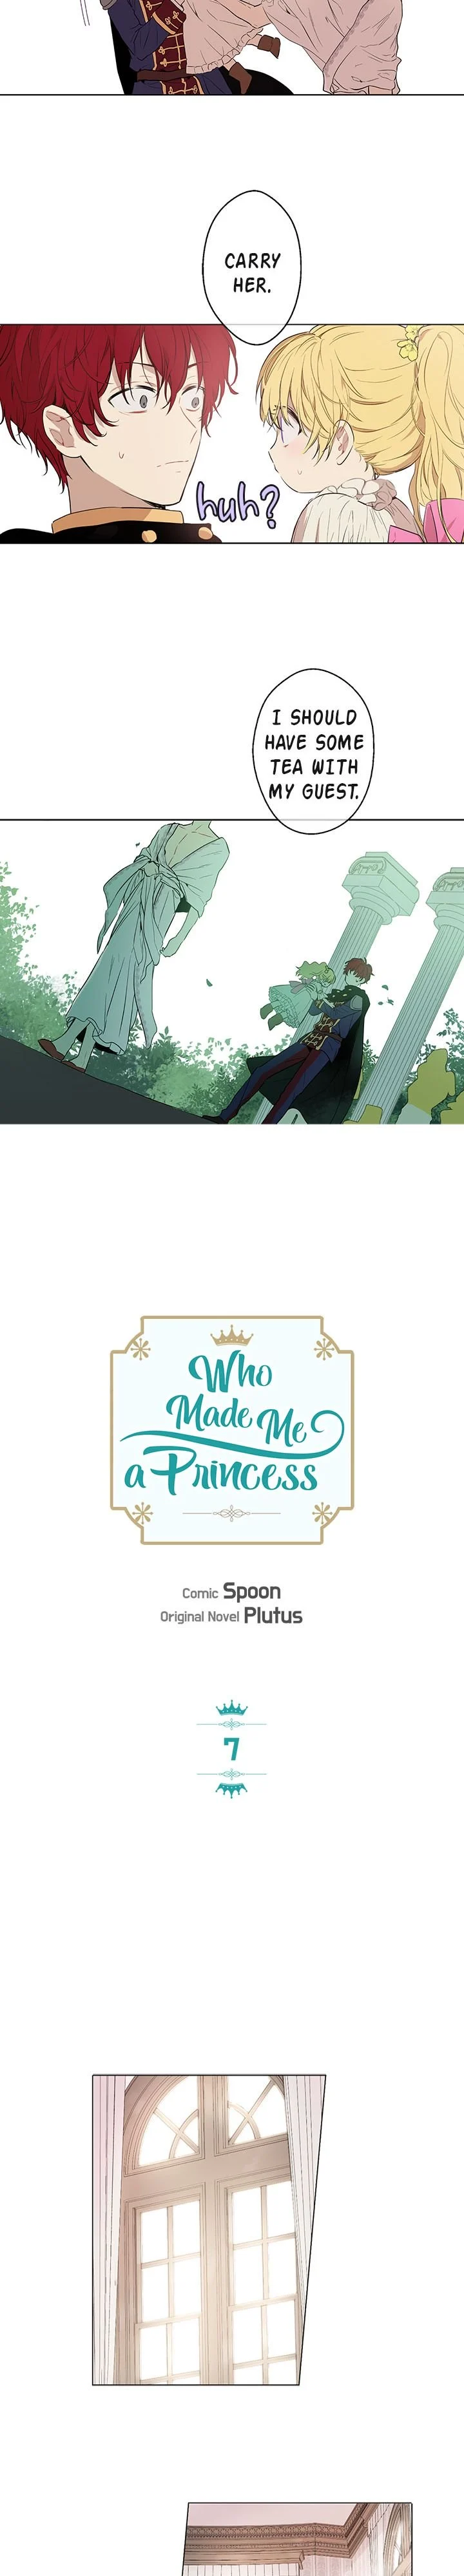 Who Made me a Princess Chapter 7 - Page 3